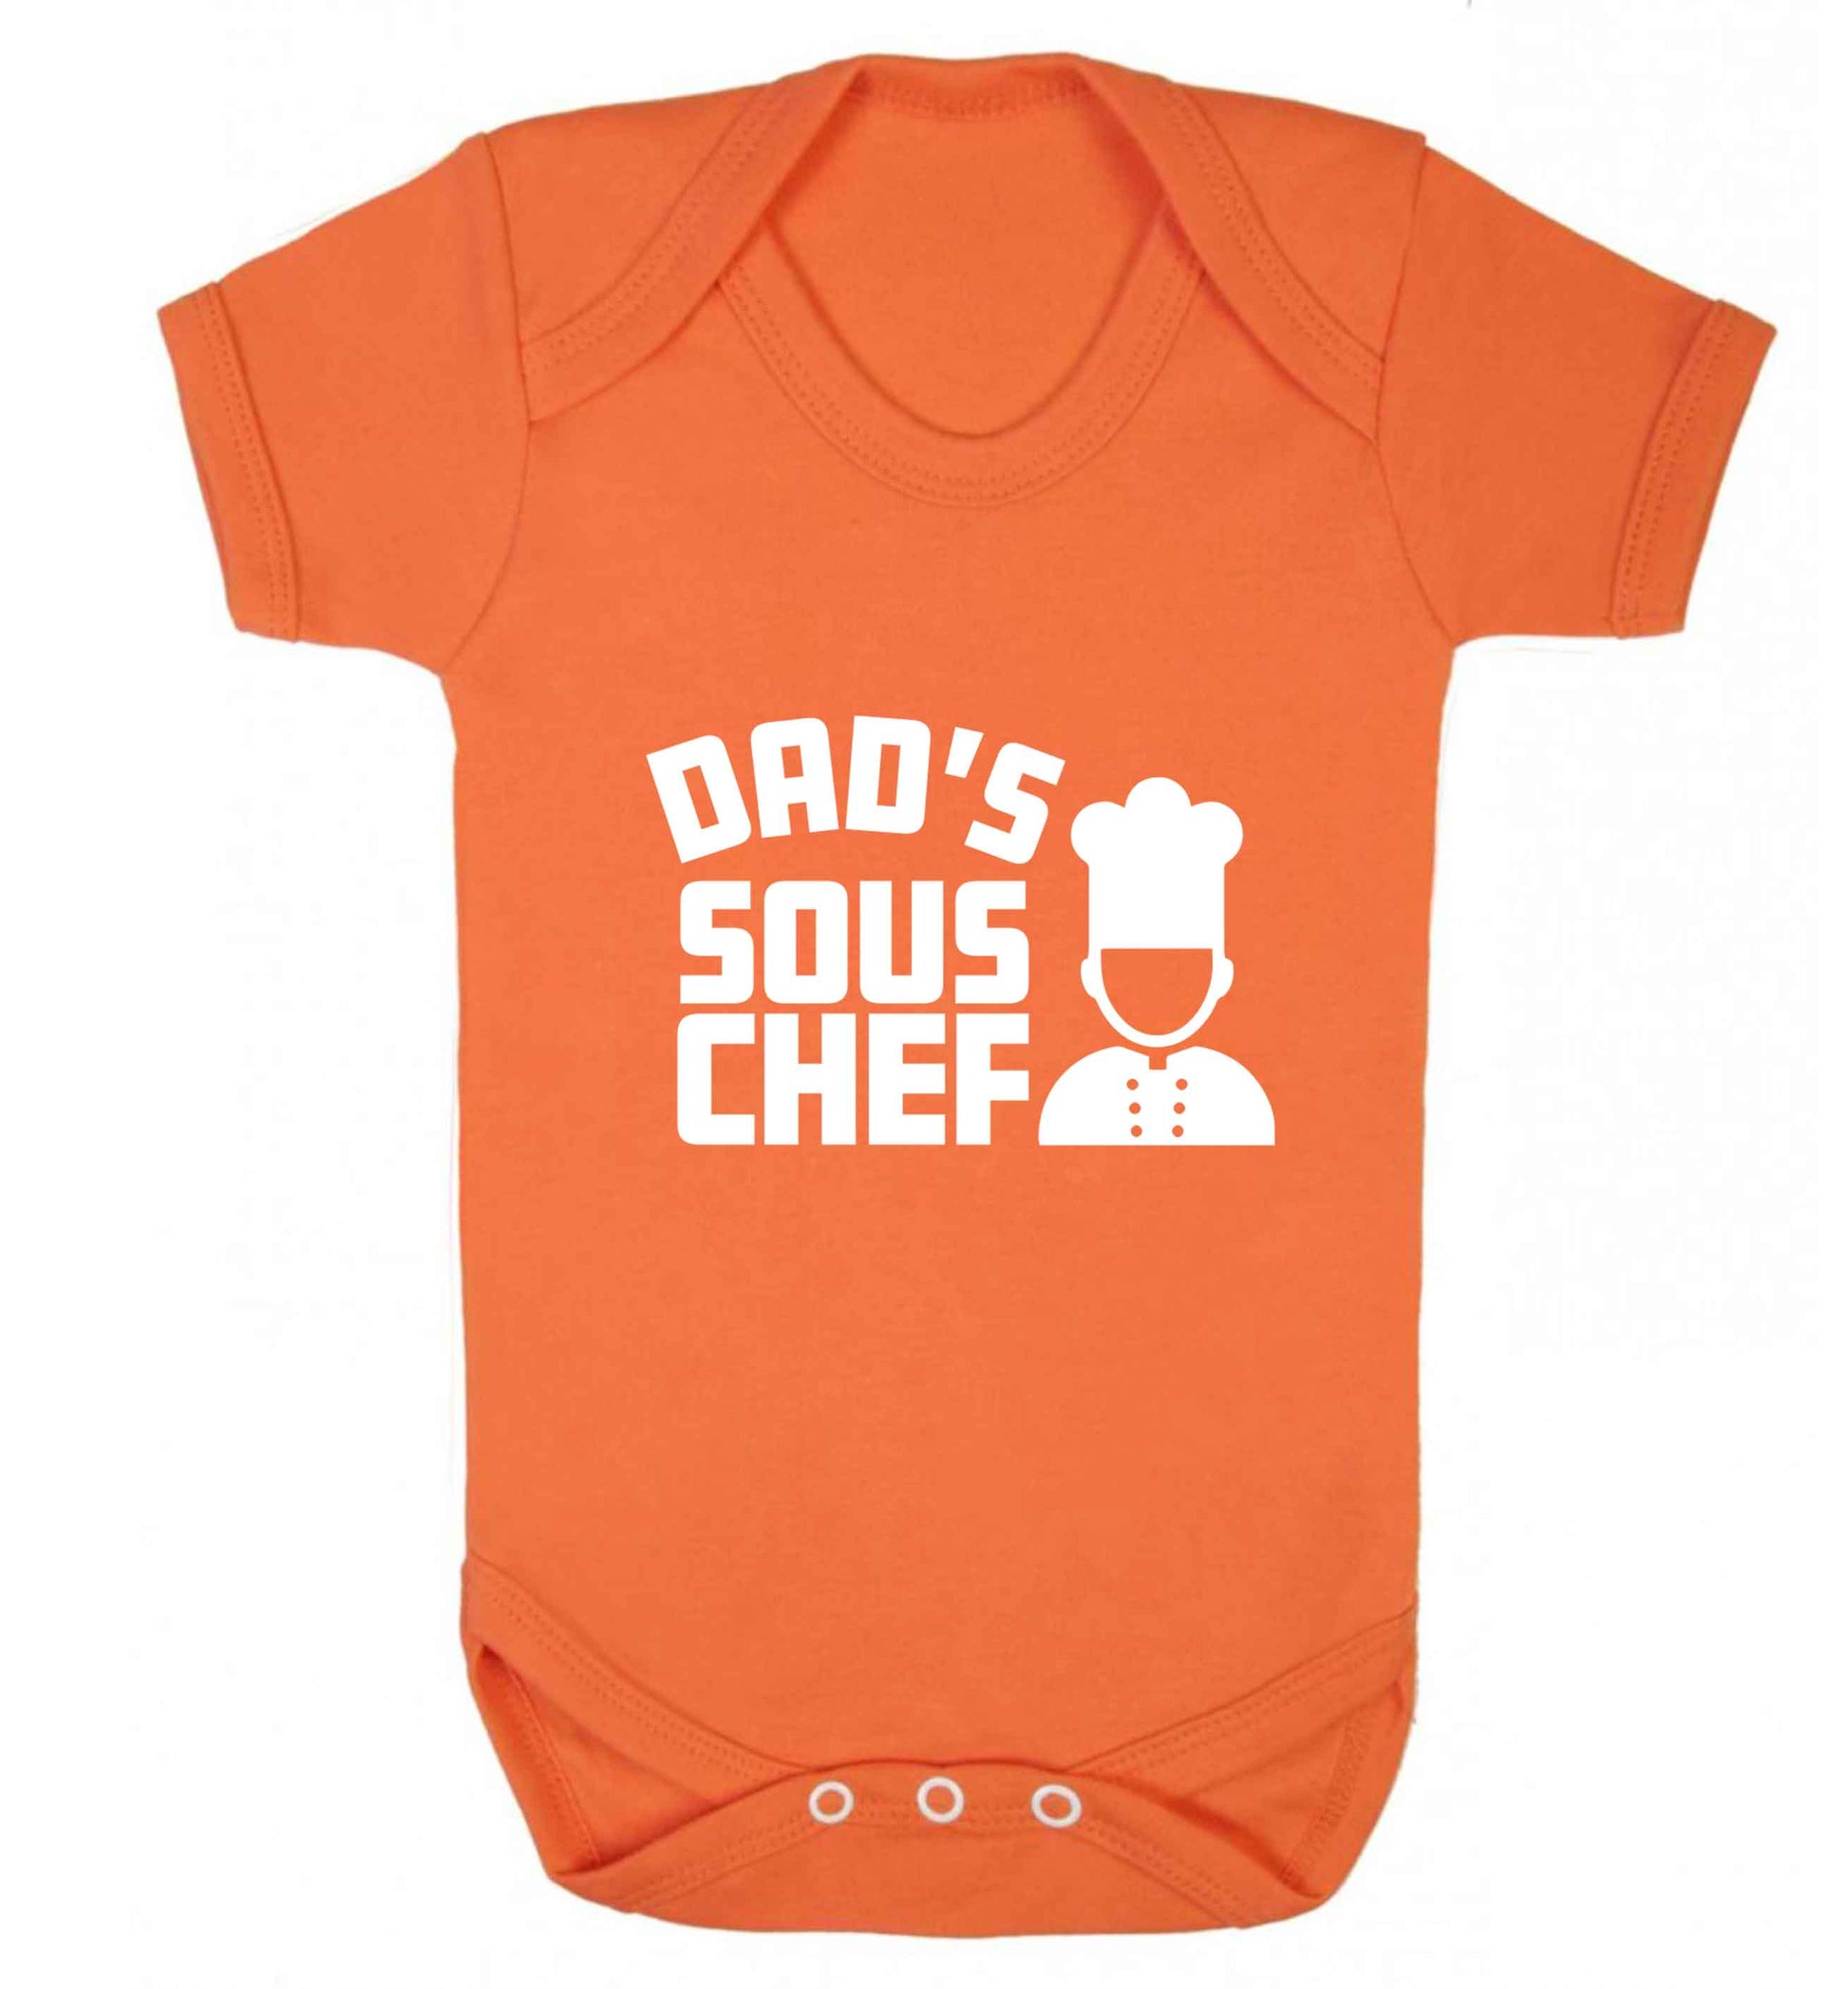 Dad's sous chef baby vest orange 18-24 months